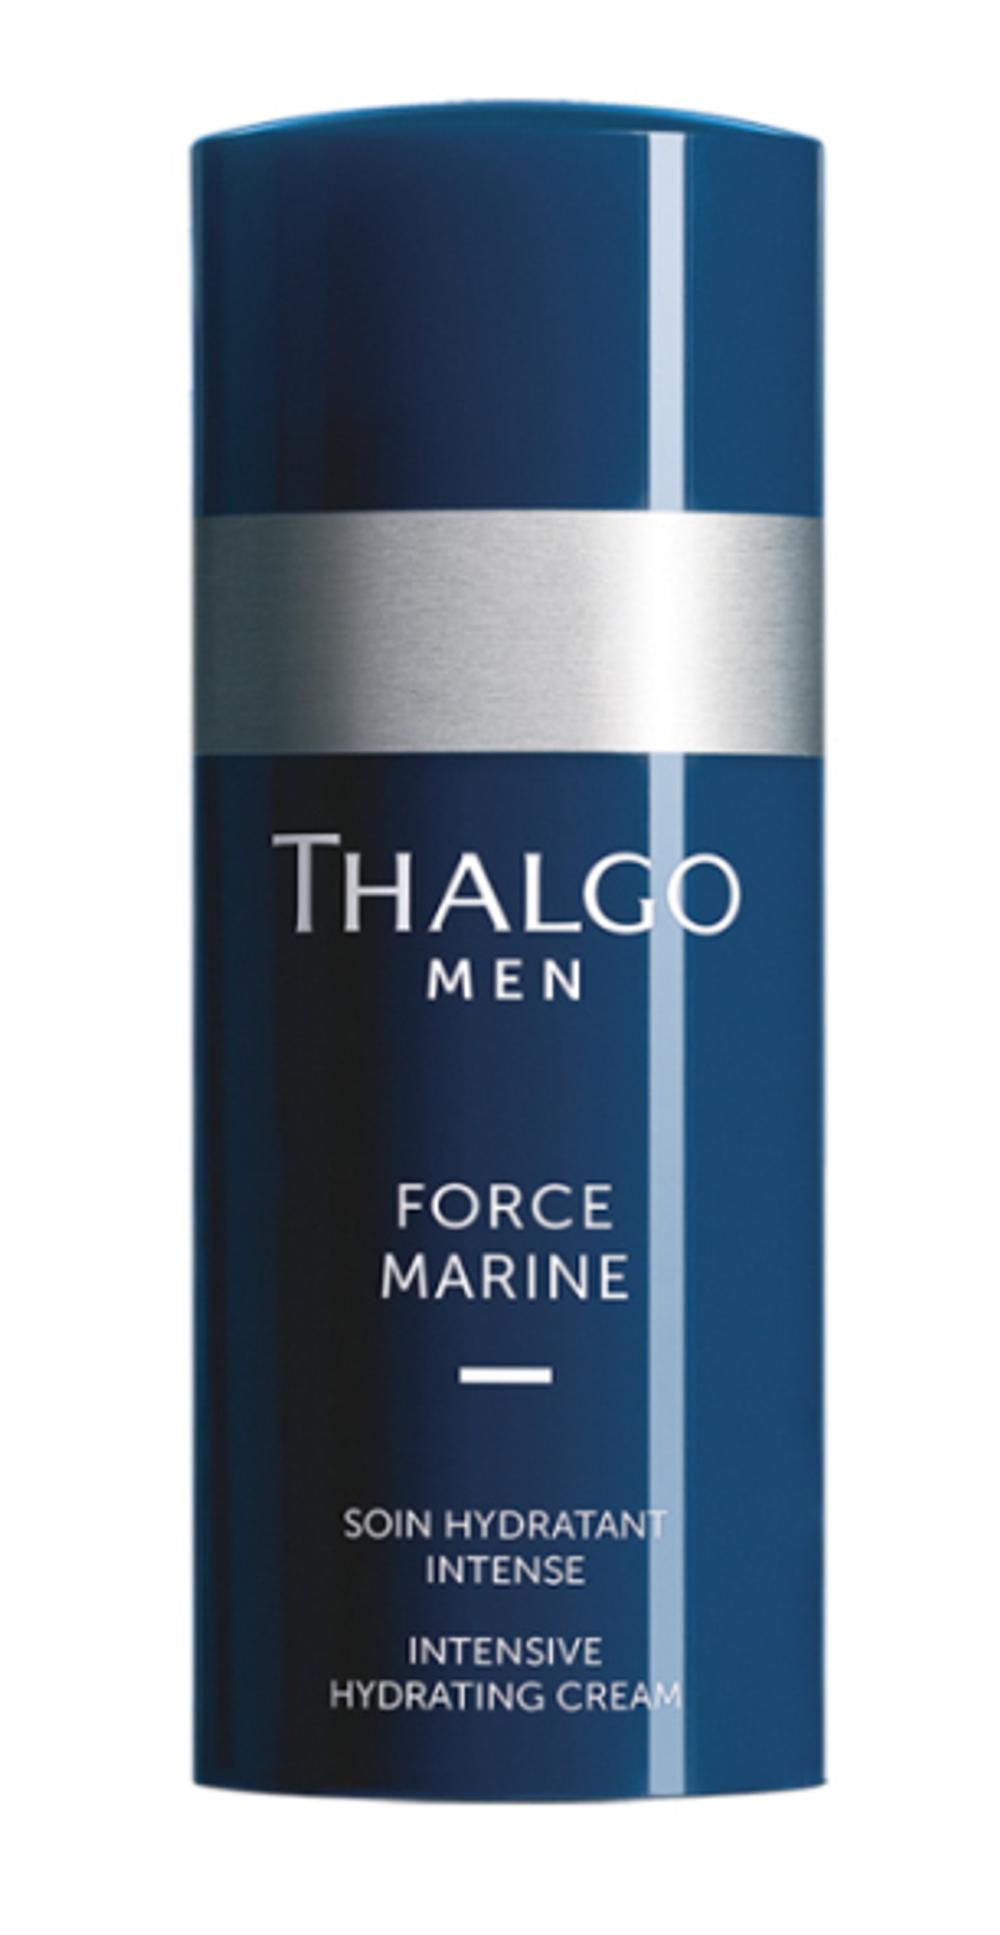 Thalgo Force Marine Intensive Hydrating Cream Интенсивный увлажняющий крем 50 мл